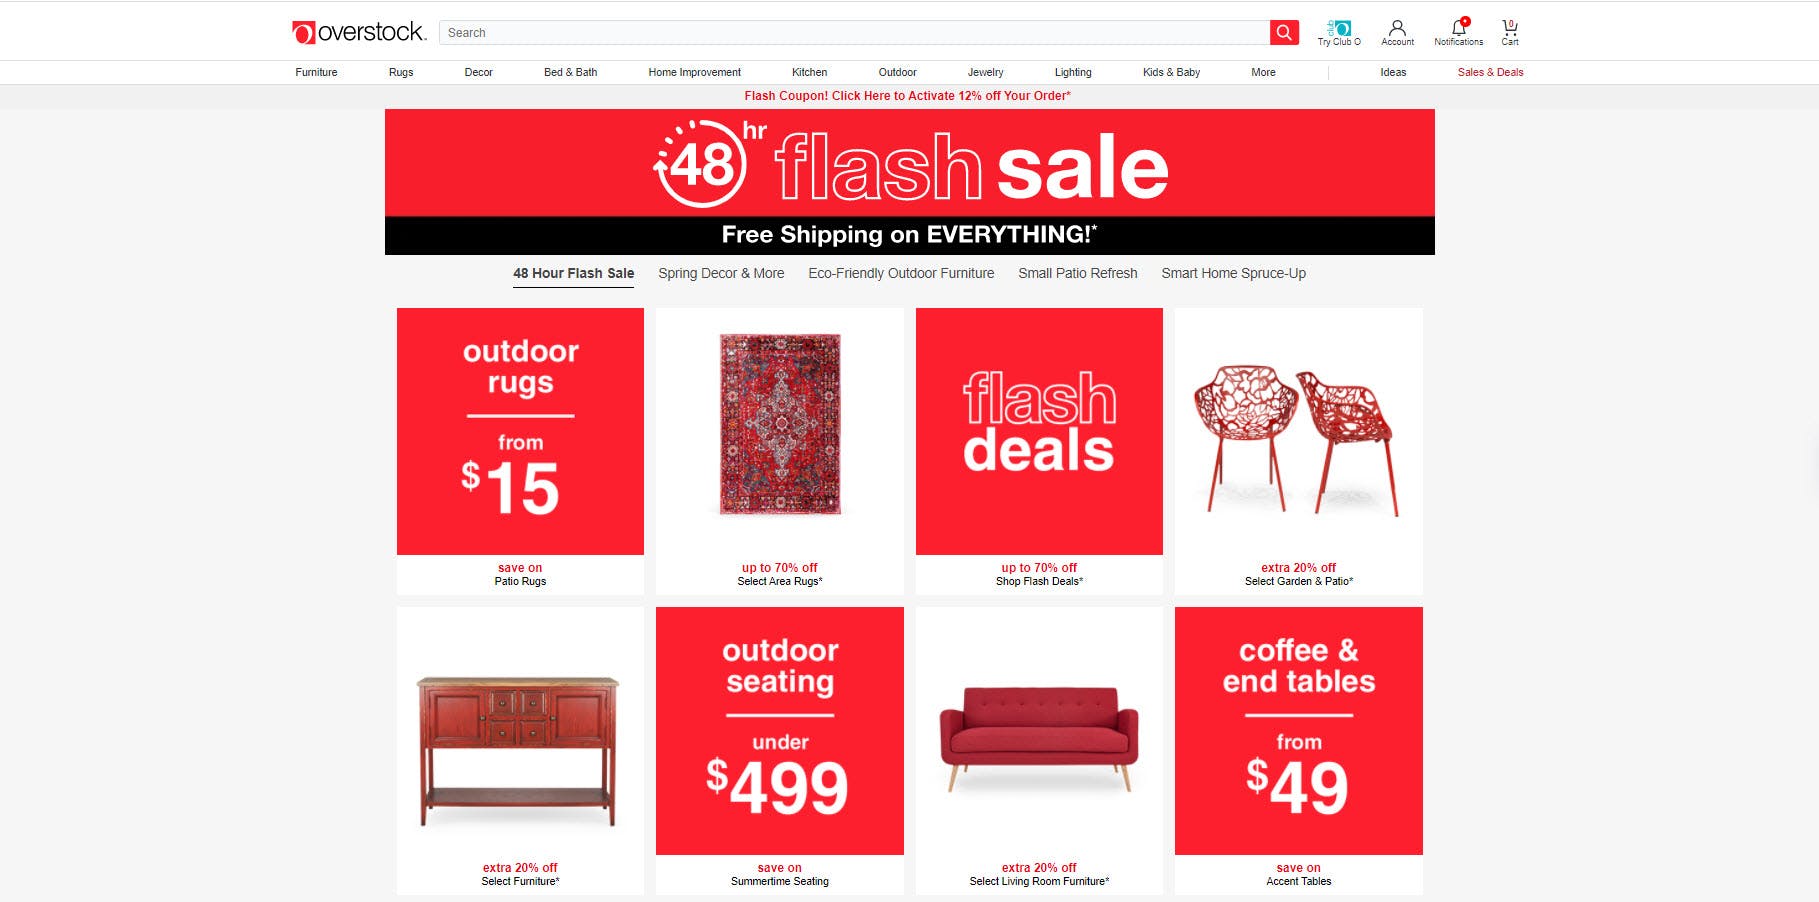 Overstock's Flash Sale on the Overstock website.